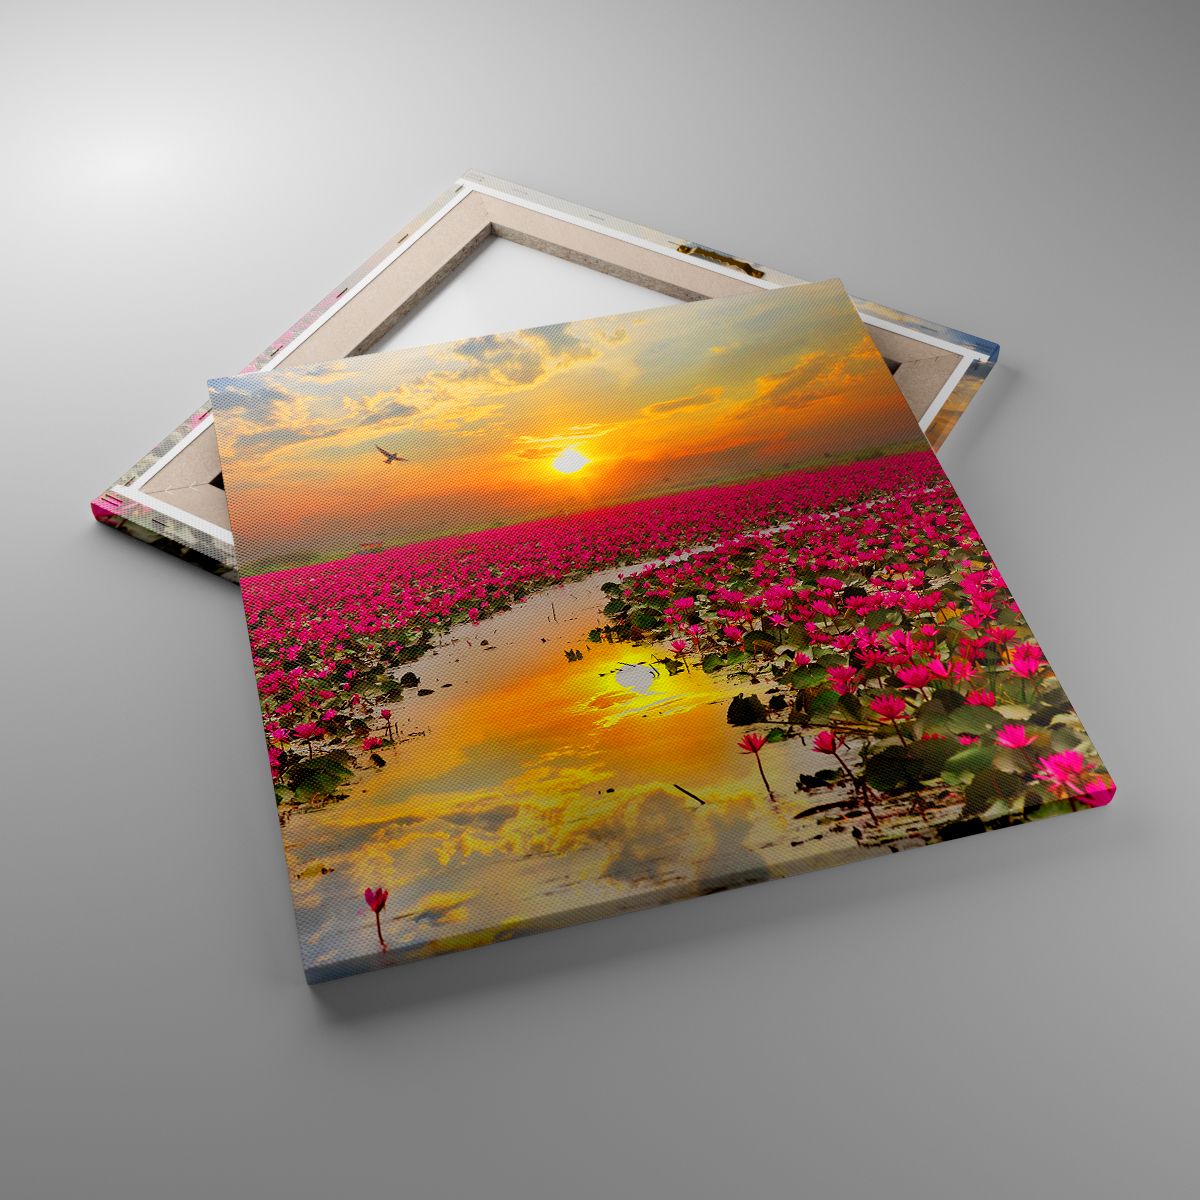 Leinwandbild Lotus Blume, Leinwandbild Blumen, Leinwandbild Landschaft, Leinwandbild Natur, Leinwandbild Der Sonnenuntergang